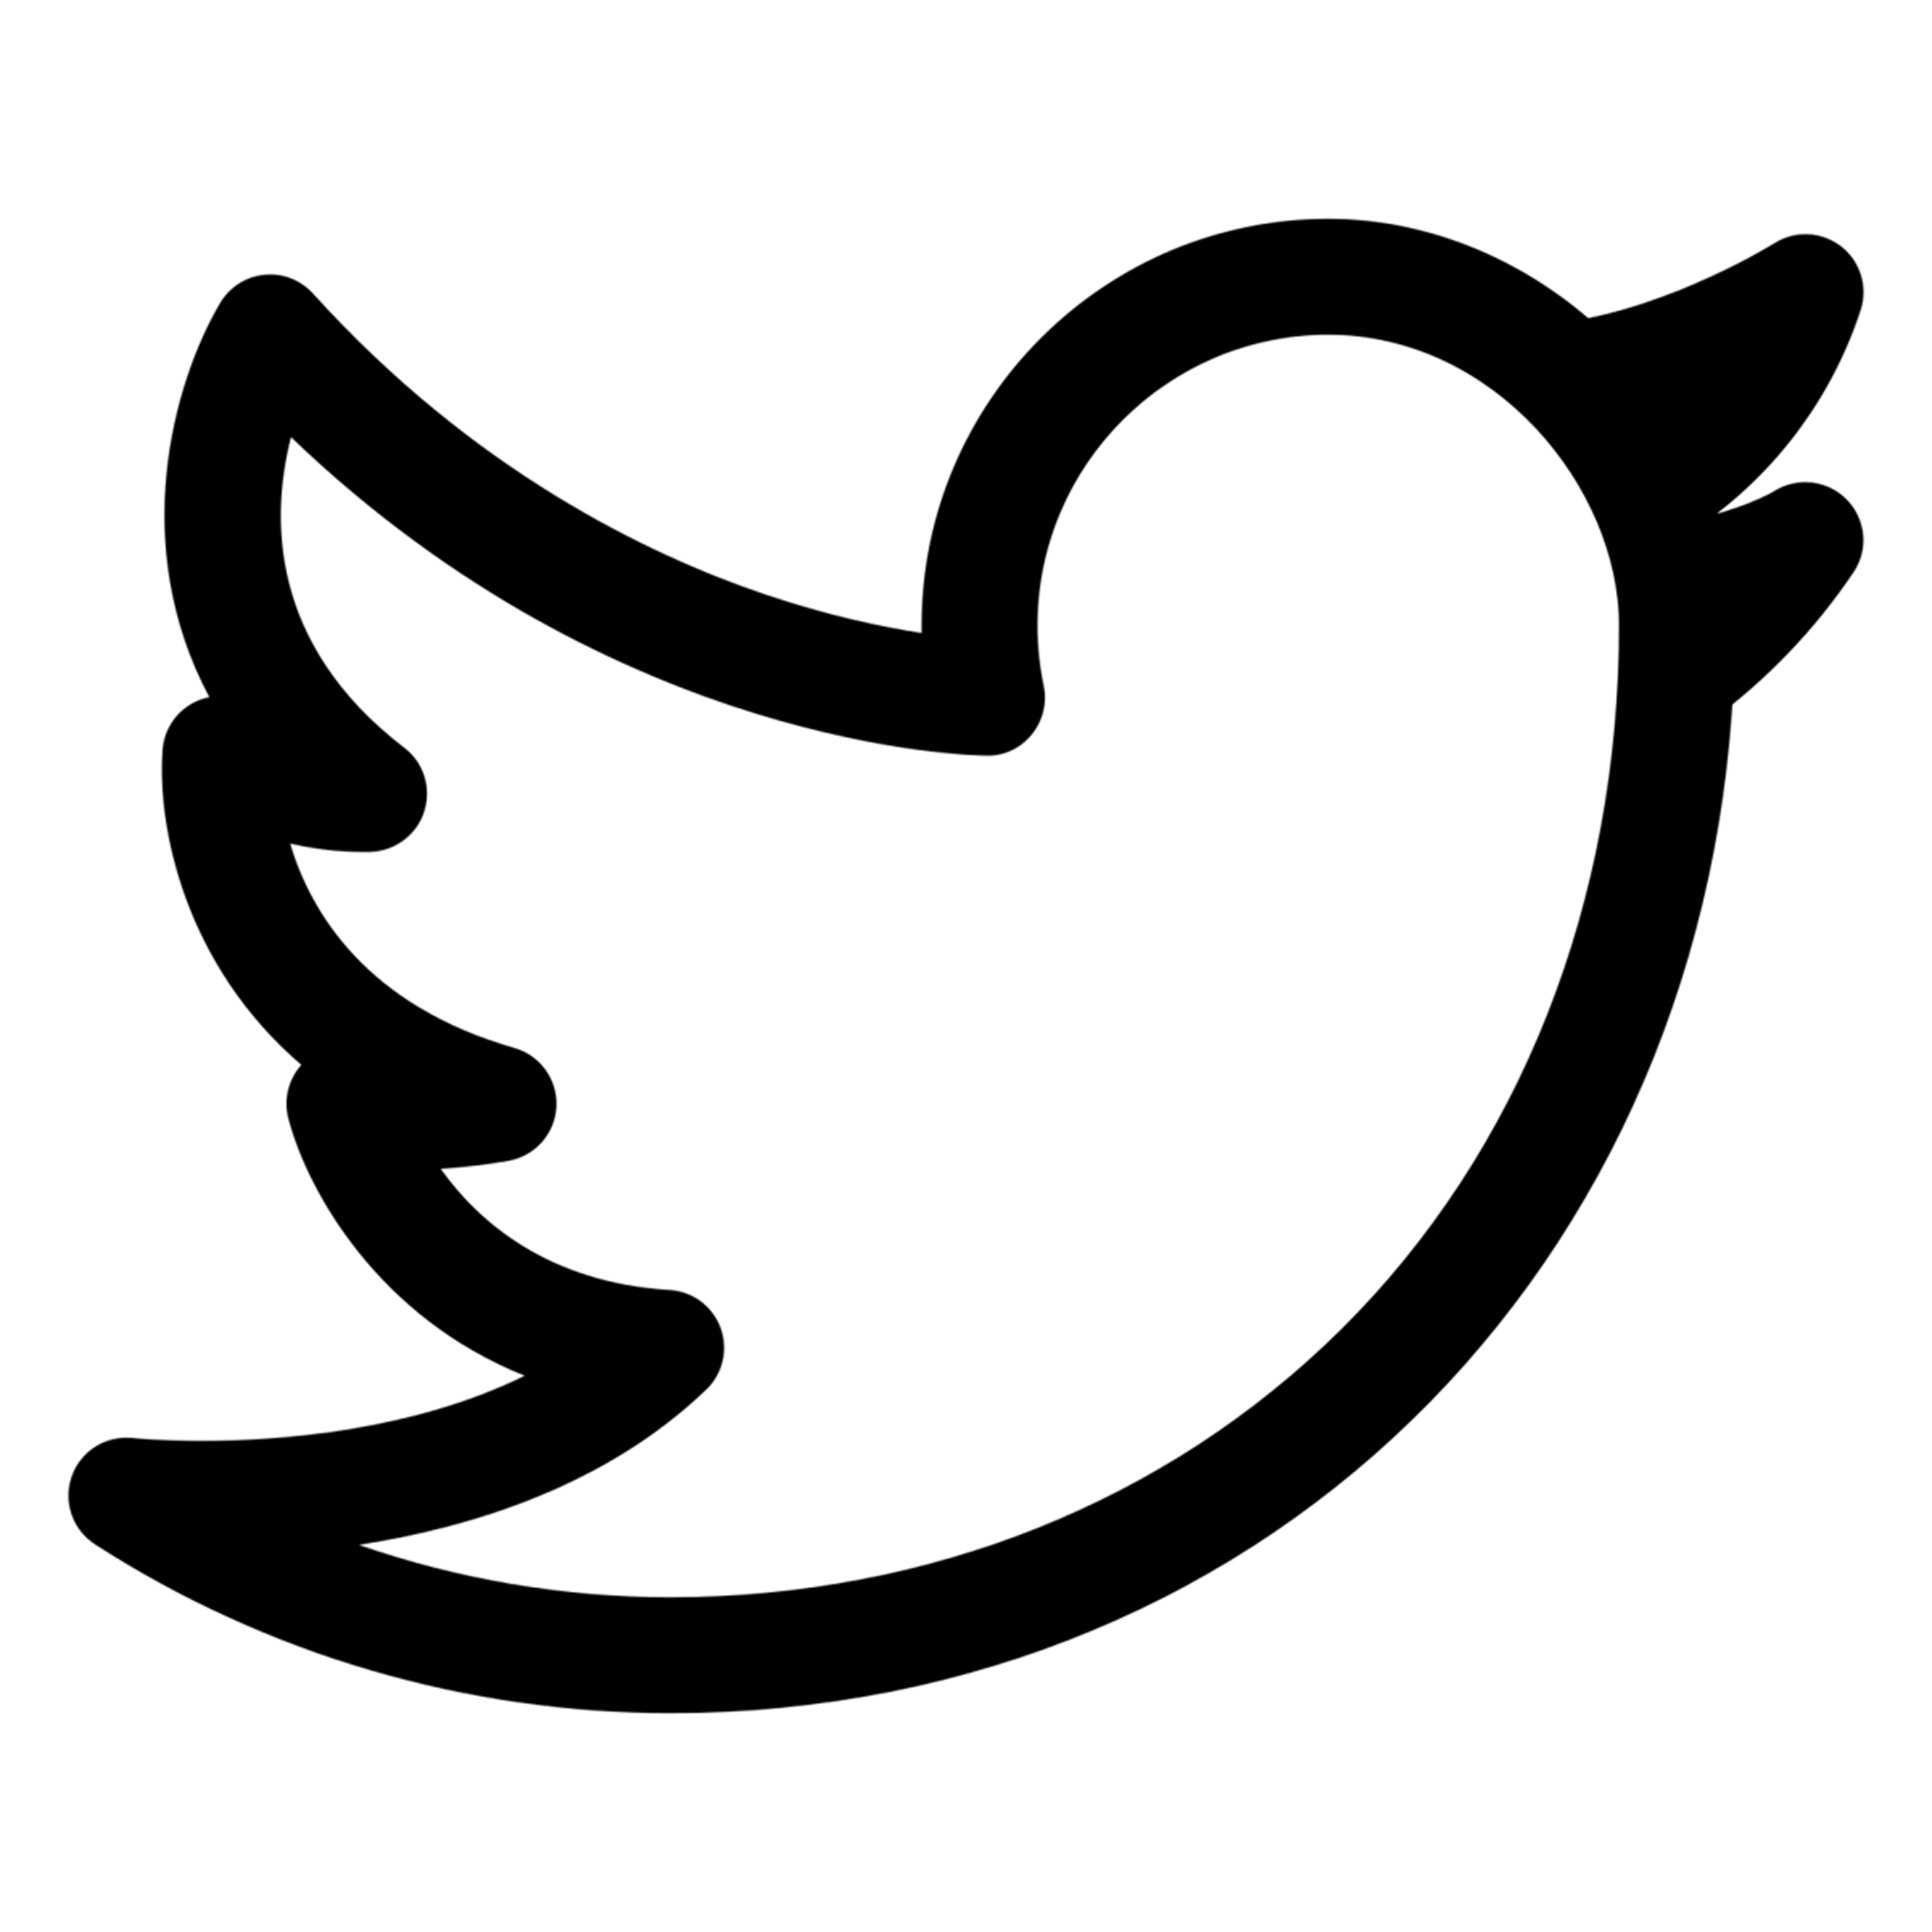 Twitter Logo Vector Black Twitter Vectors Photos And Psd Files